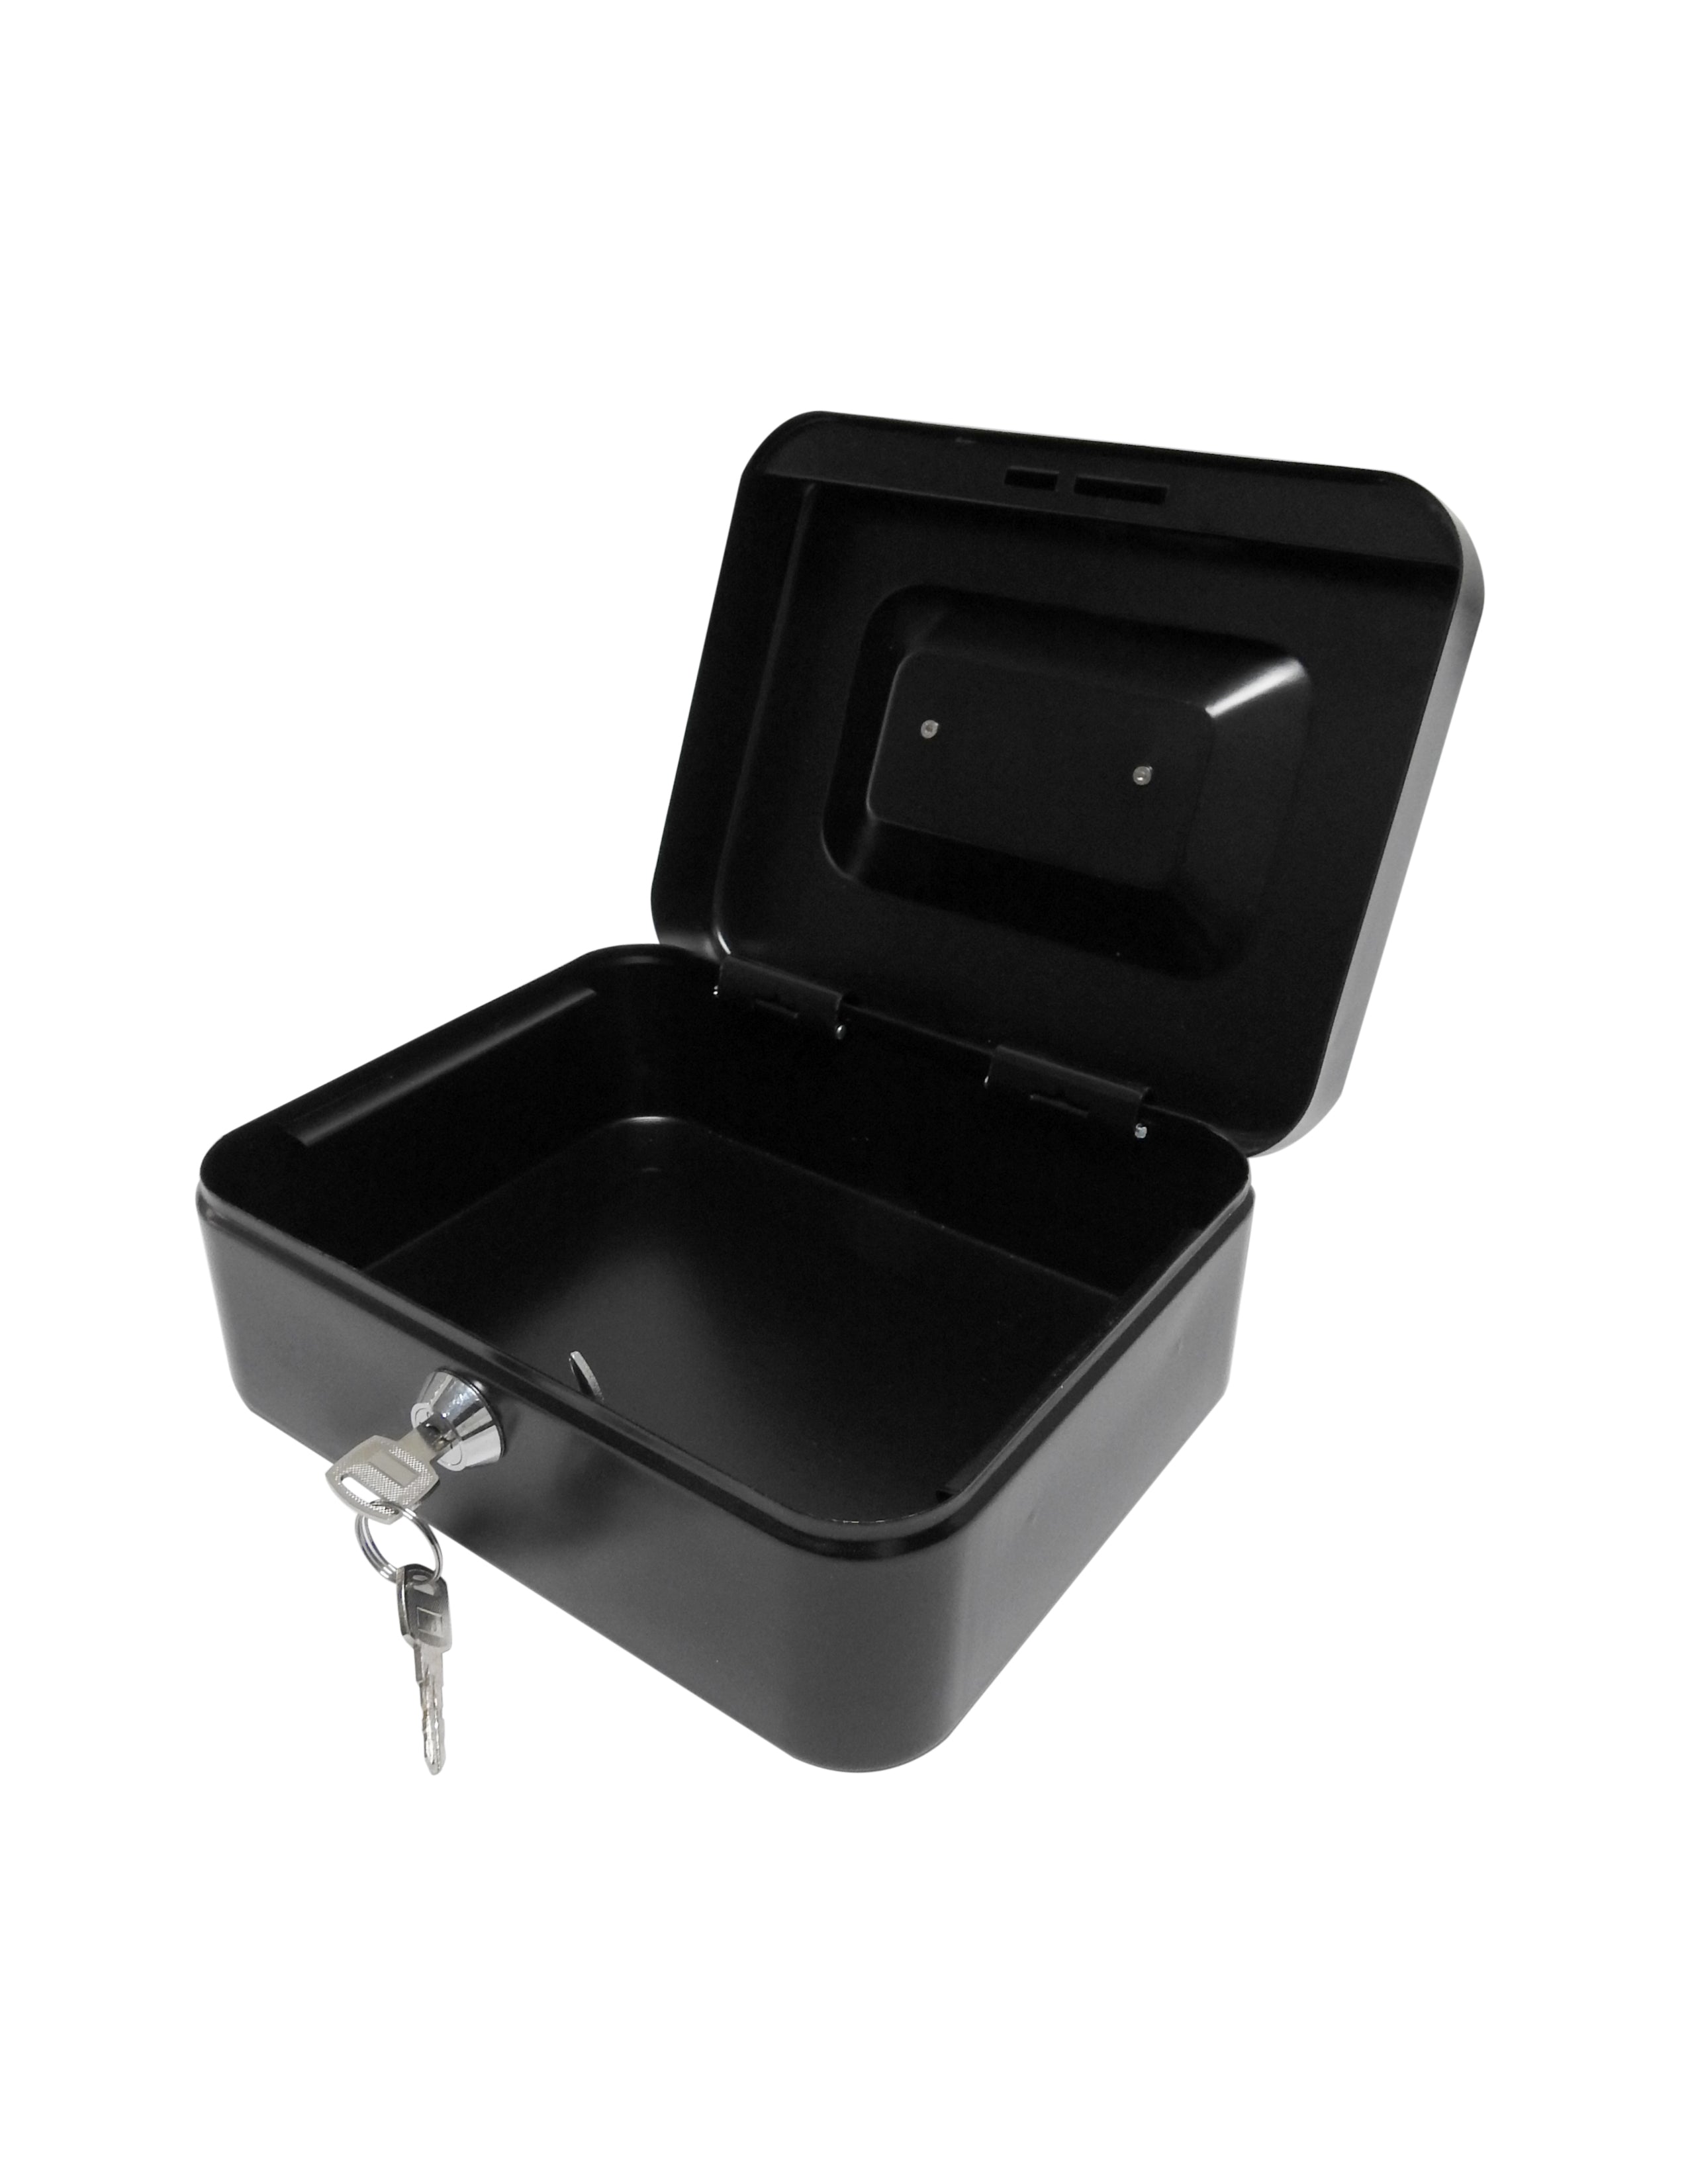 MCBK-1200/ MEDIUM-SIZED SECURITY KEY CASH BOX